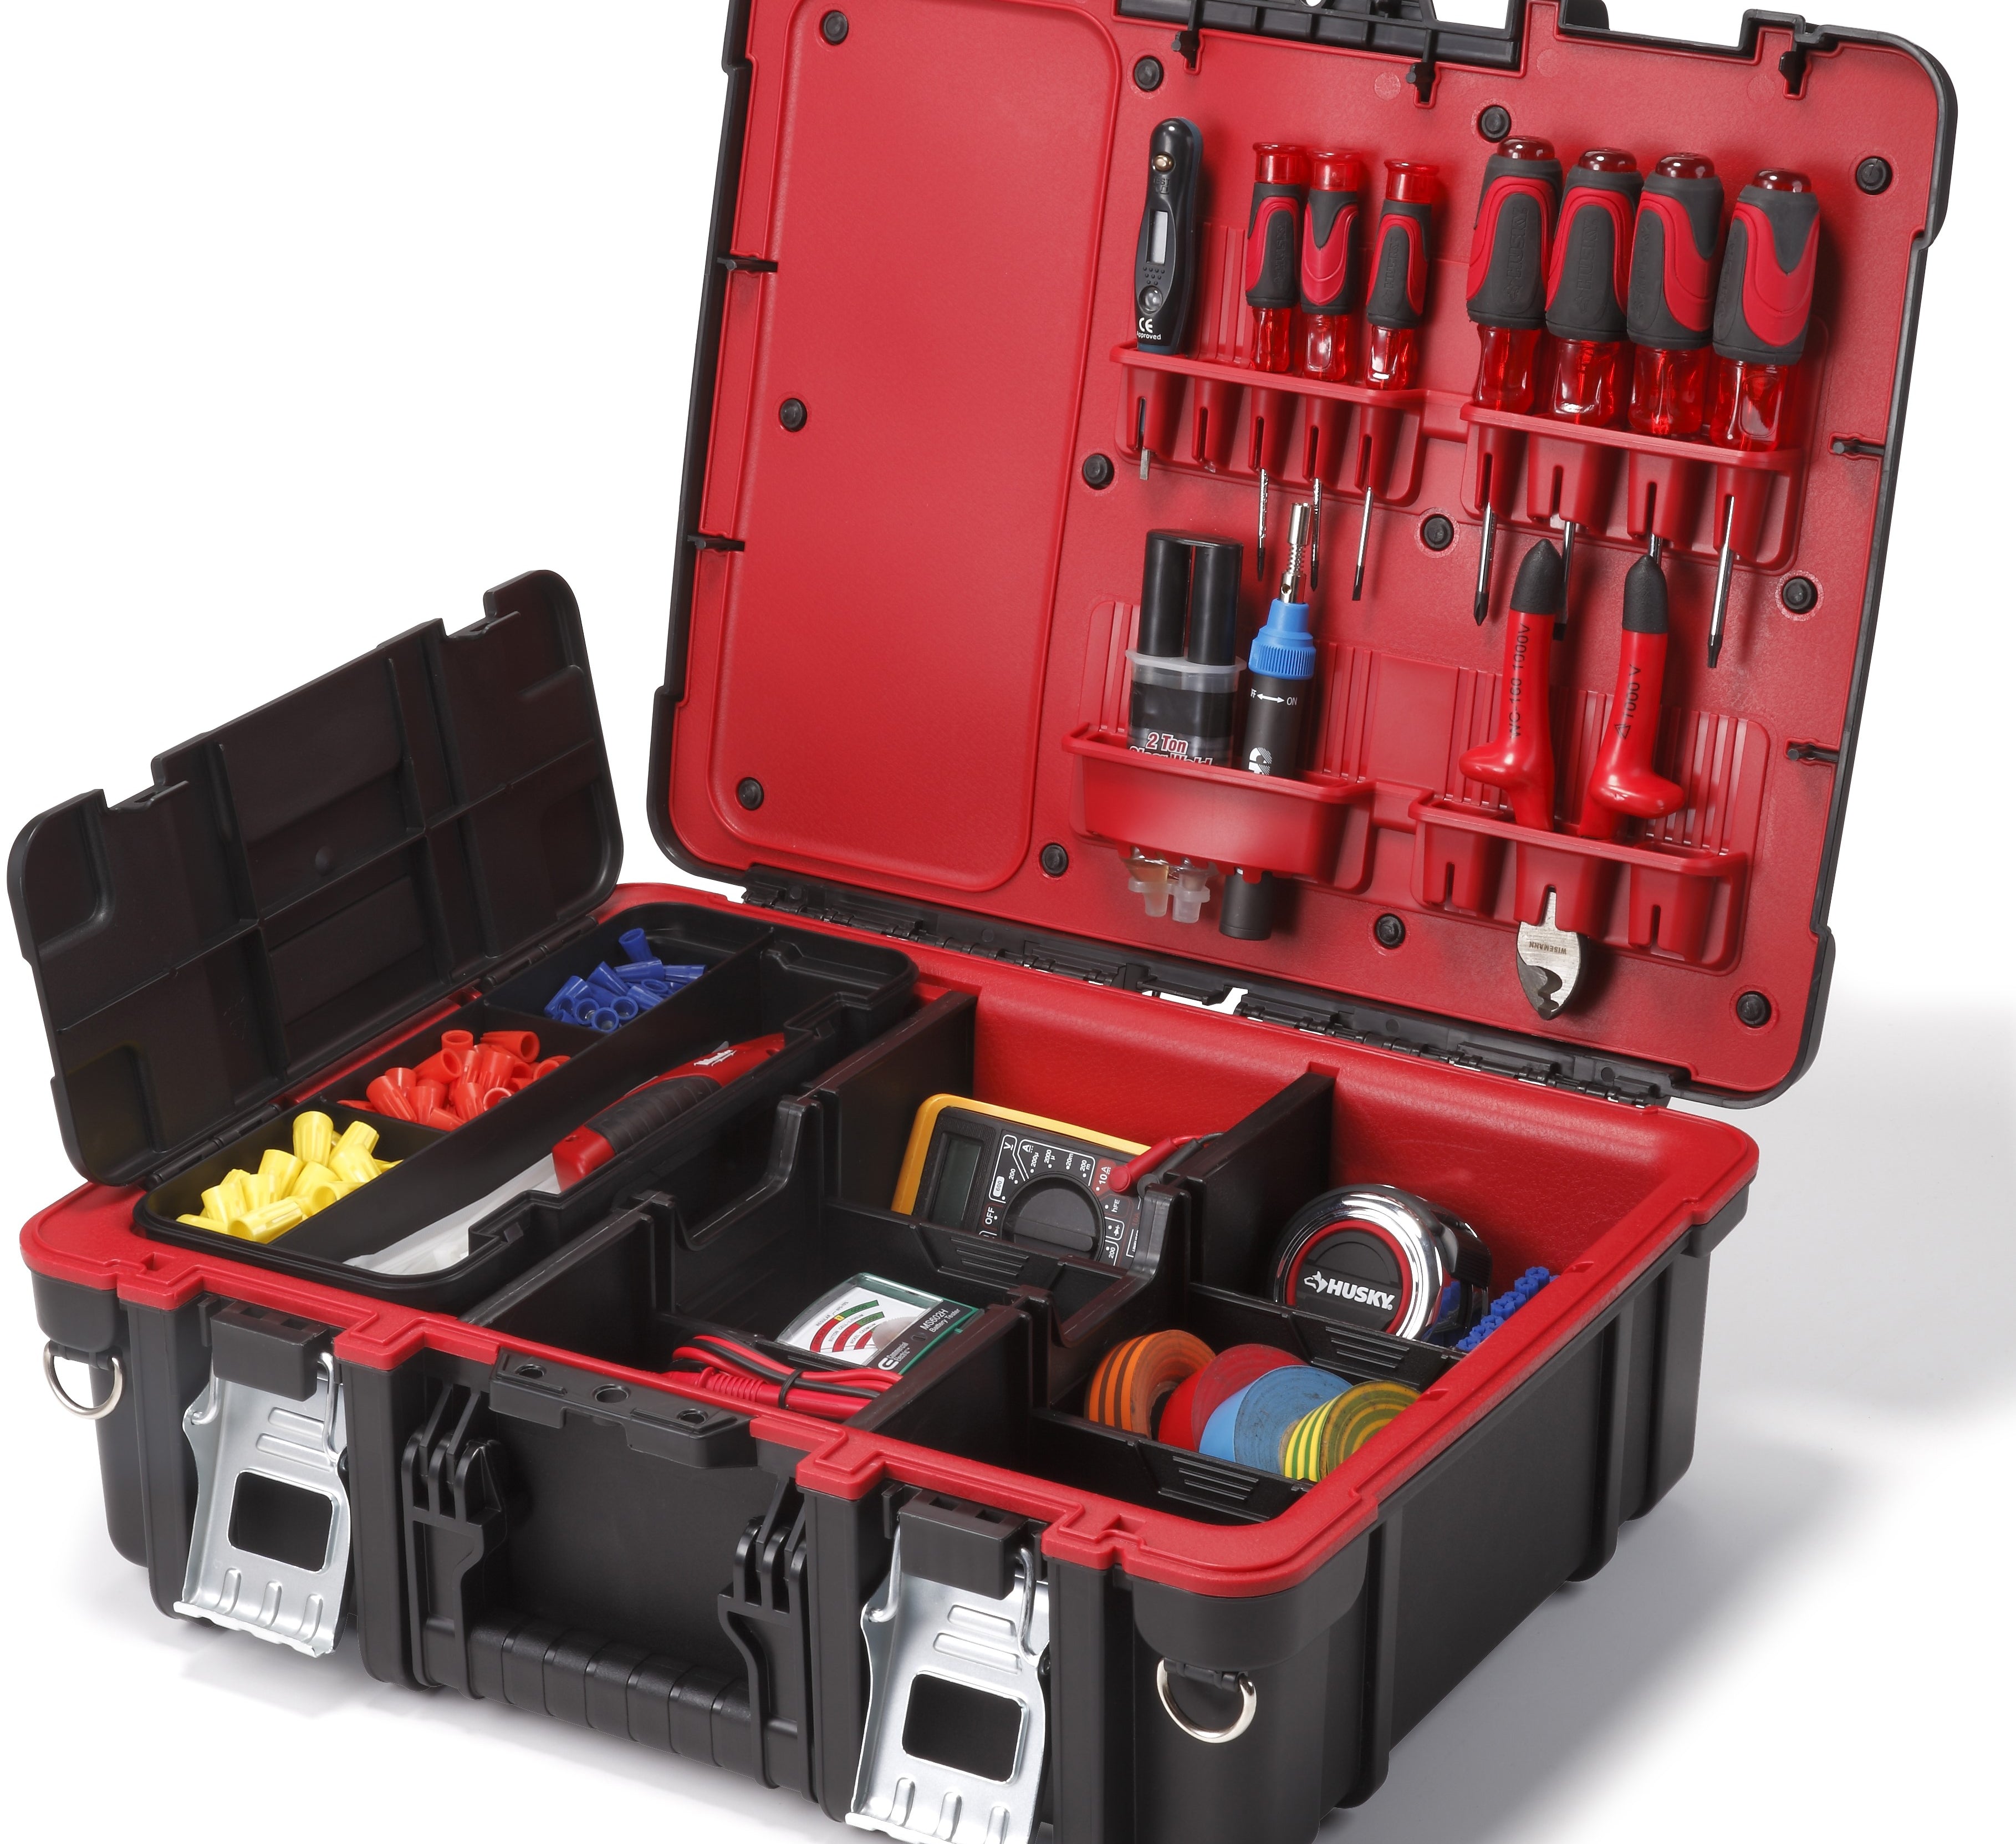 Keter Technician case full of tools